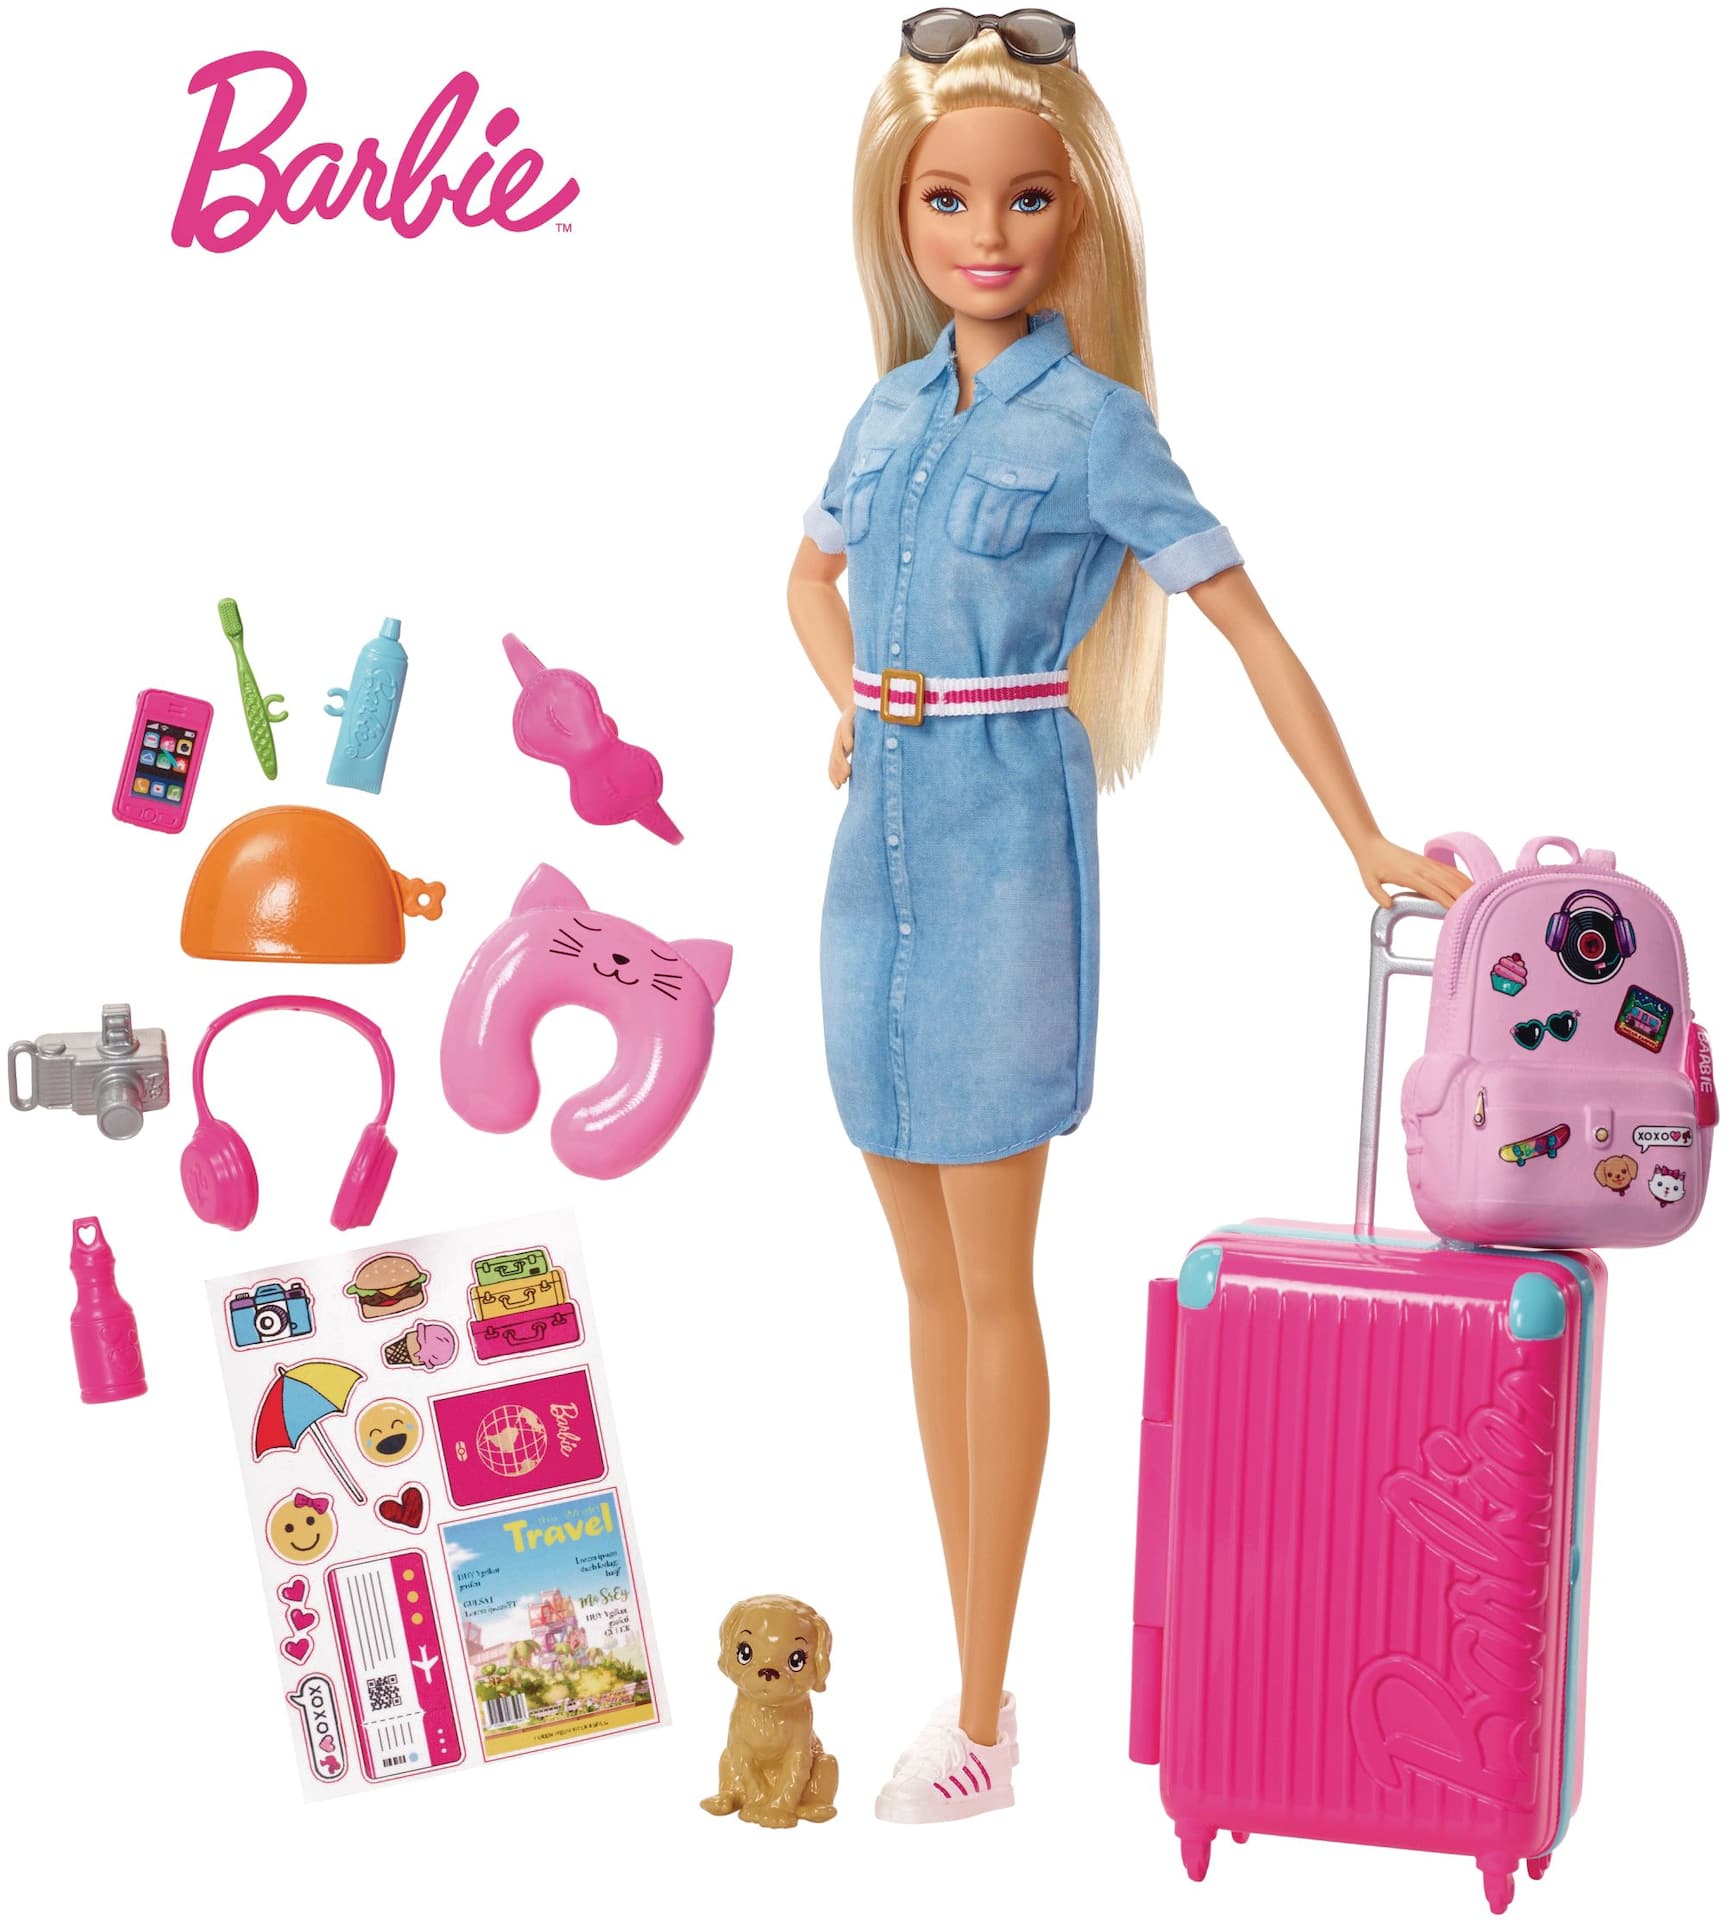 SALE OLD STOCK Barbie Dreamhouse Adventure Daisy Doll, Hobbies